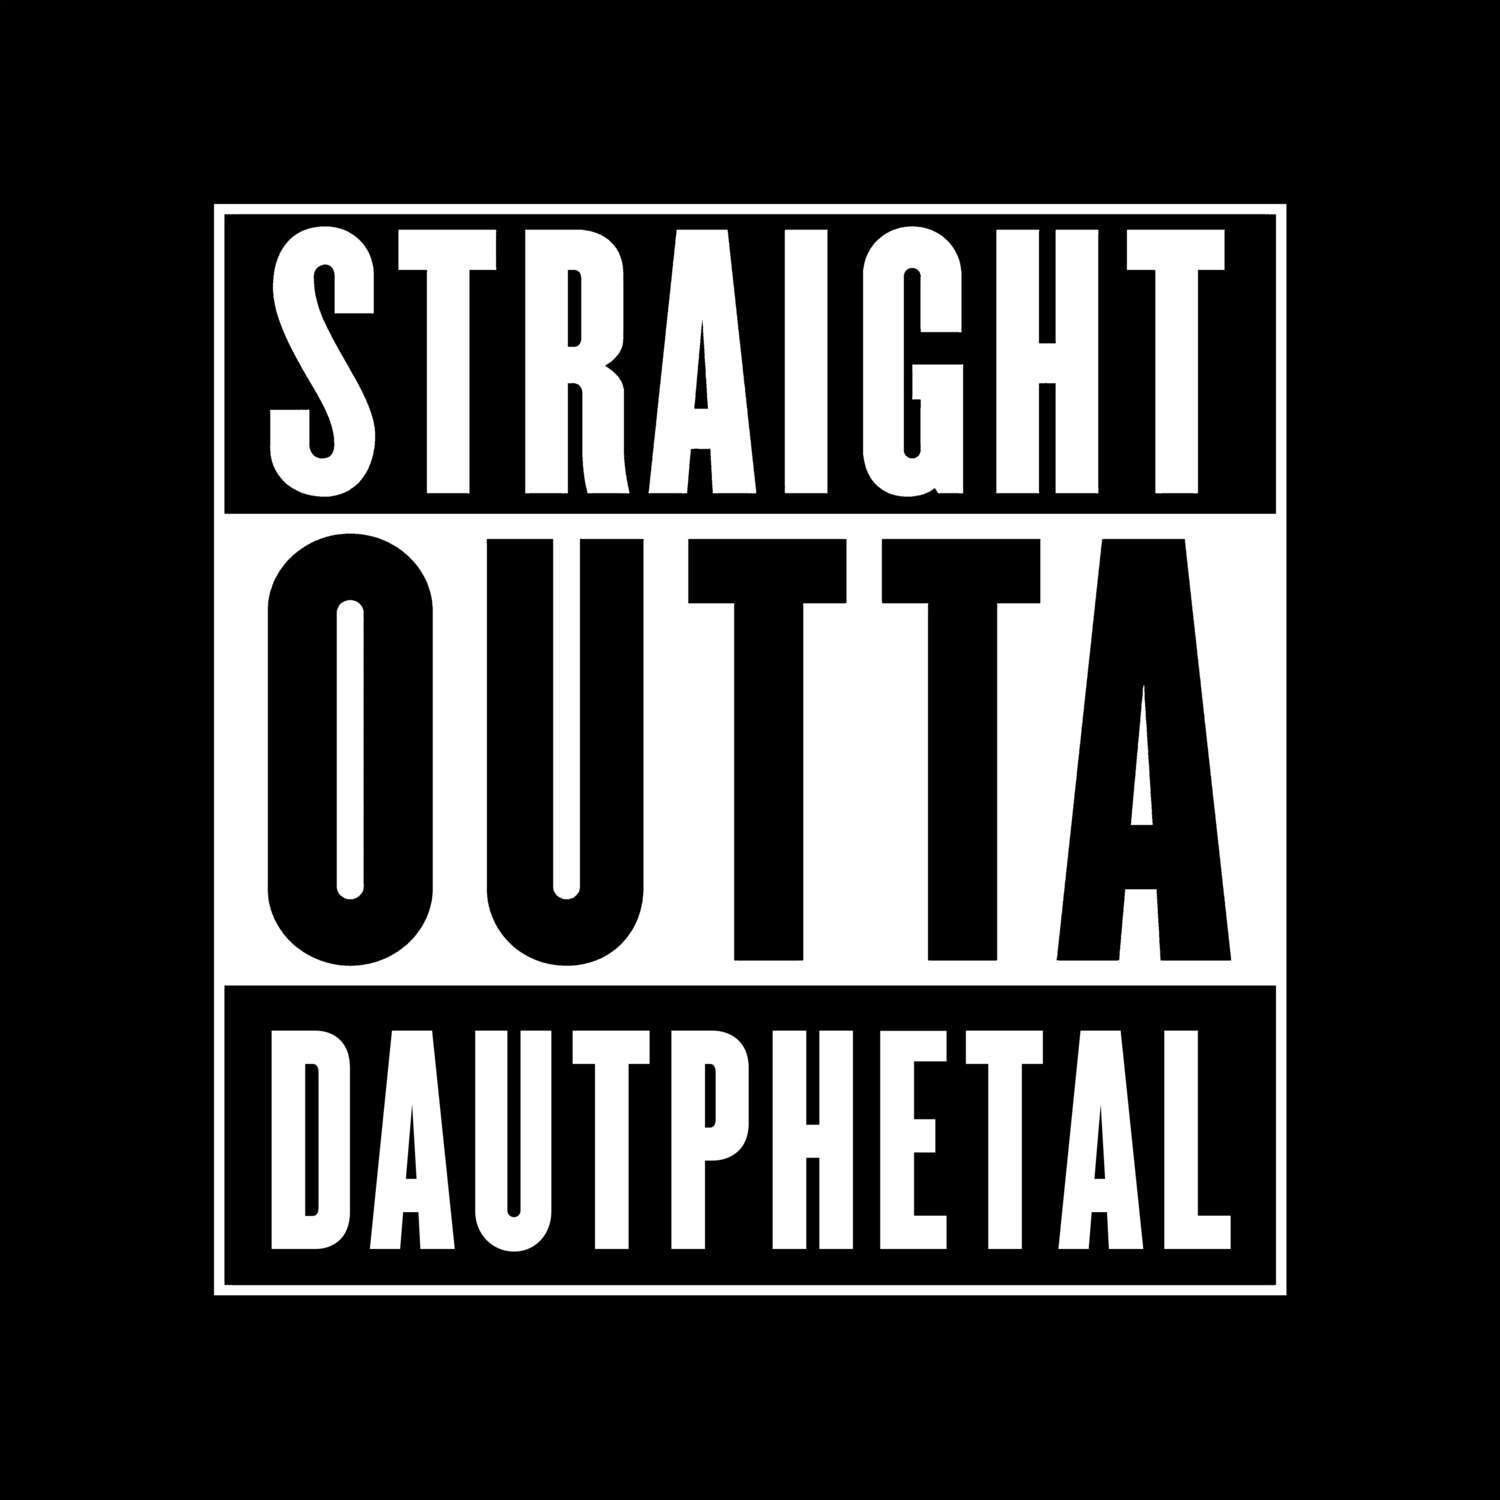 Dautphetal T-Shirt »Straight Outta«